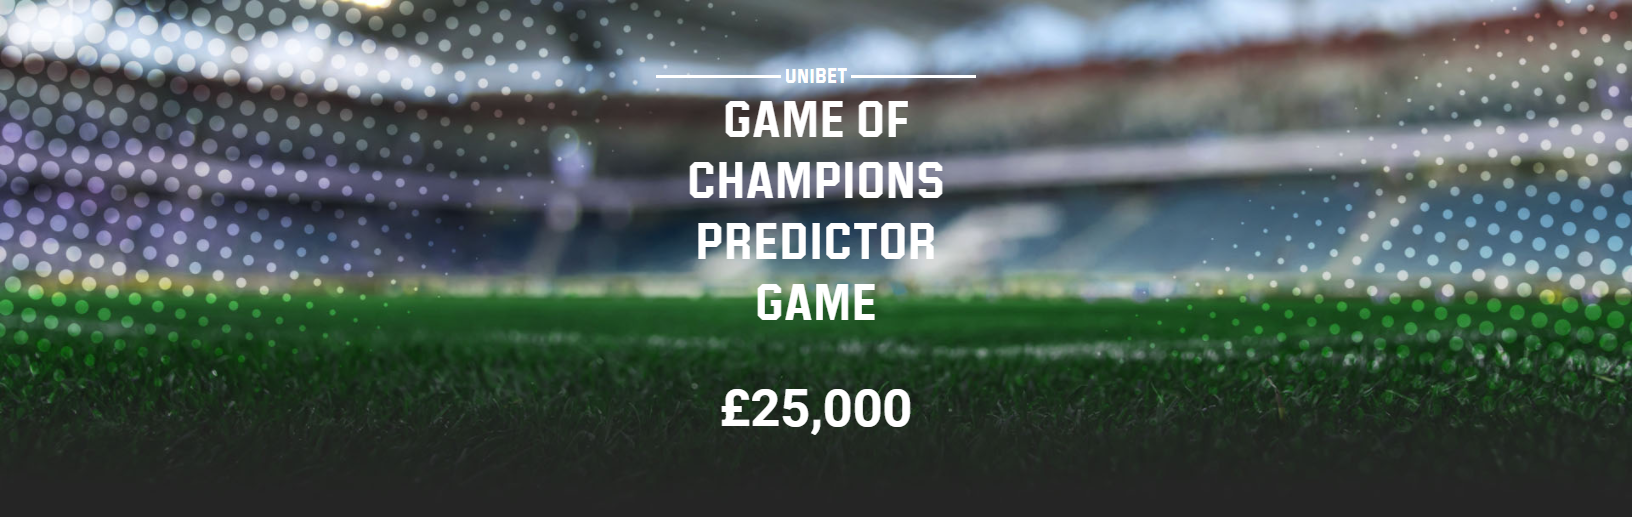 bookmaker unibet champions league prediction game